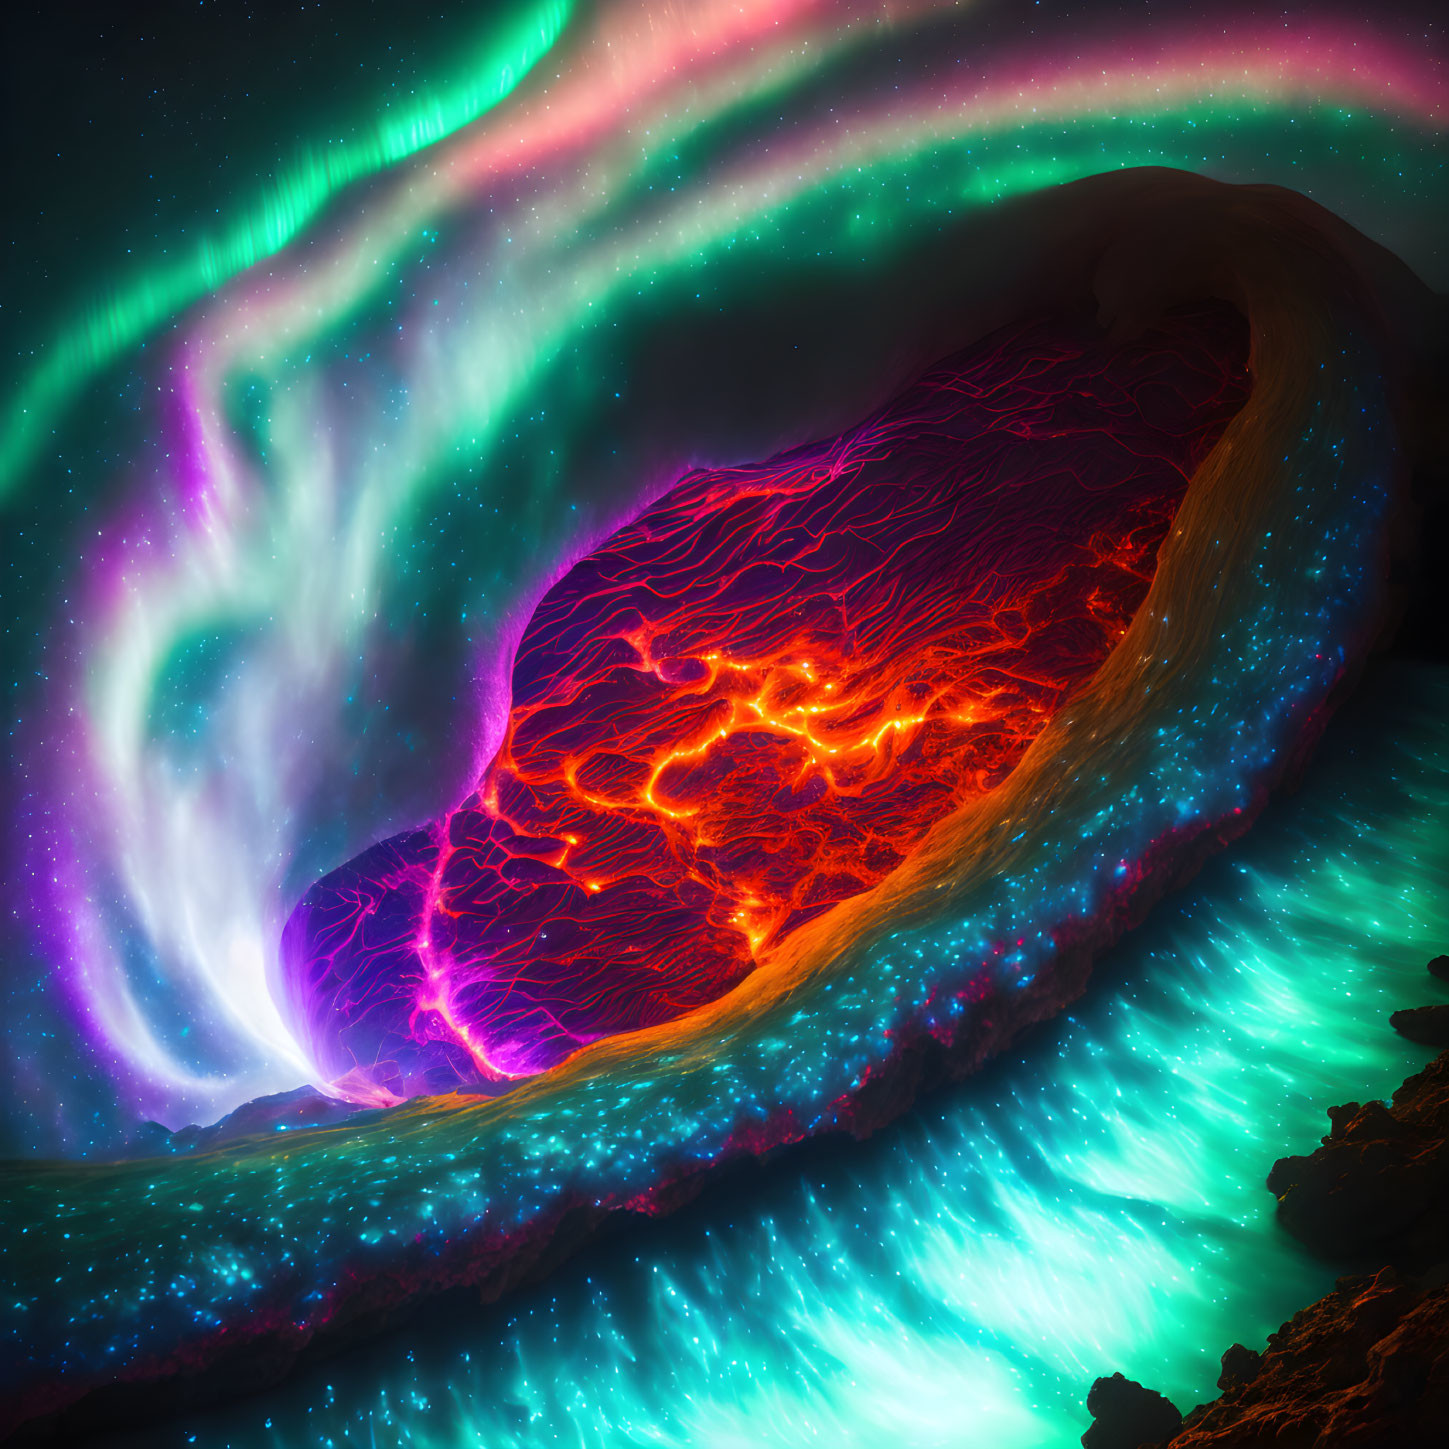 Neon auroras over molten landscape with flowing lava